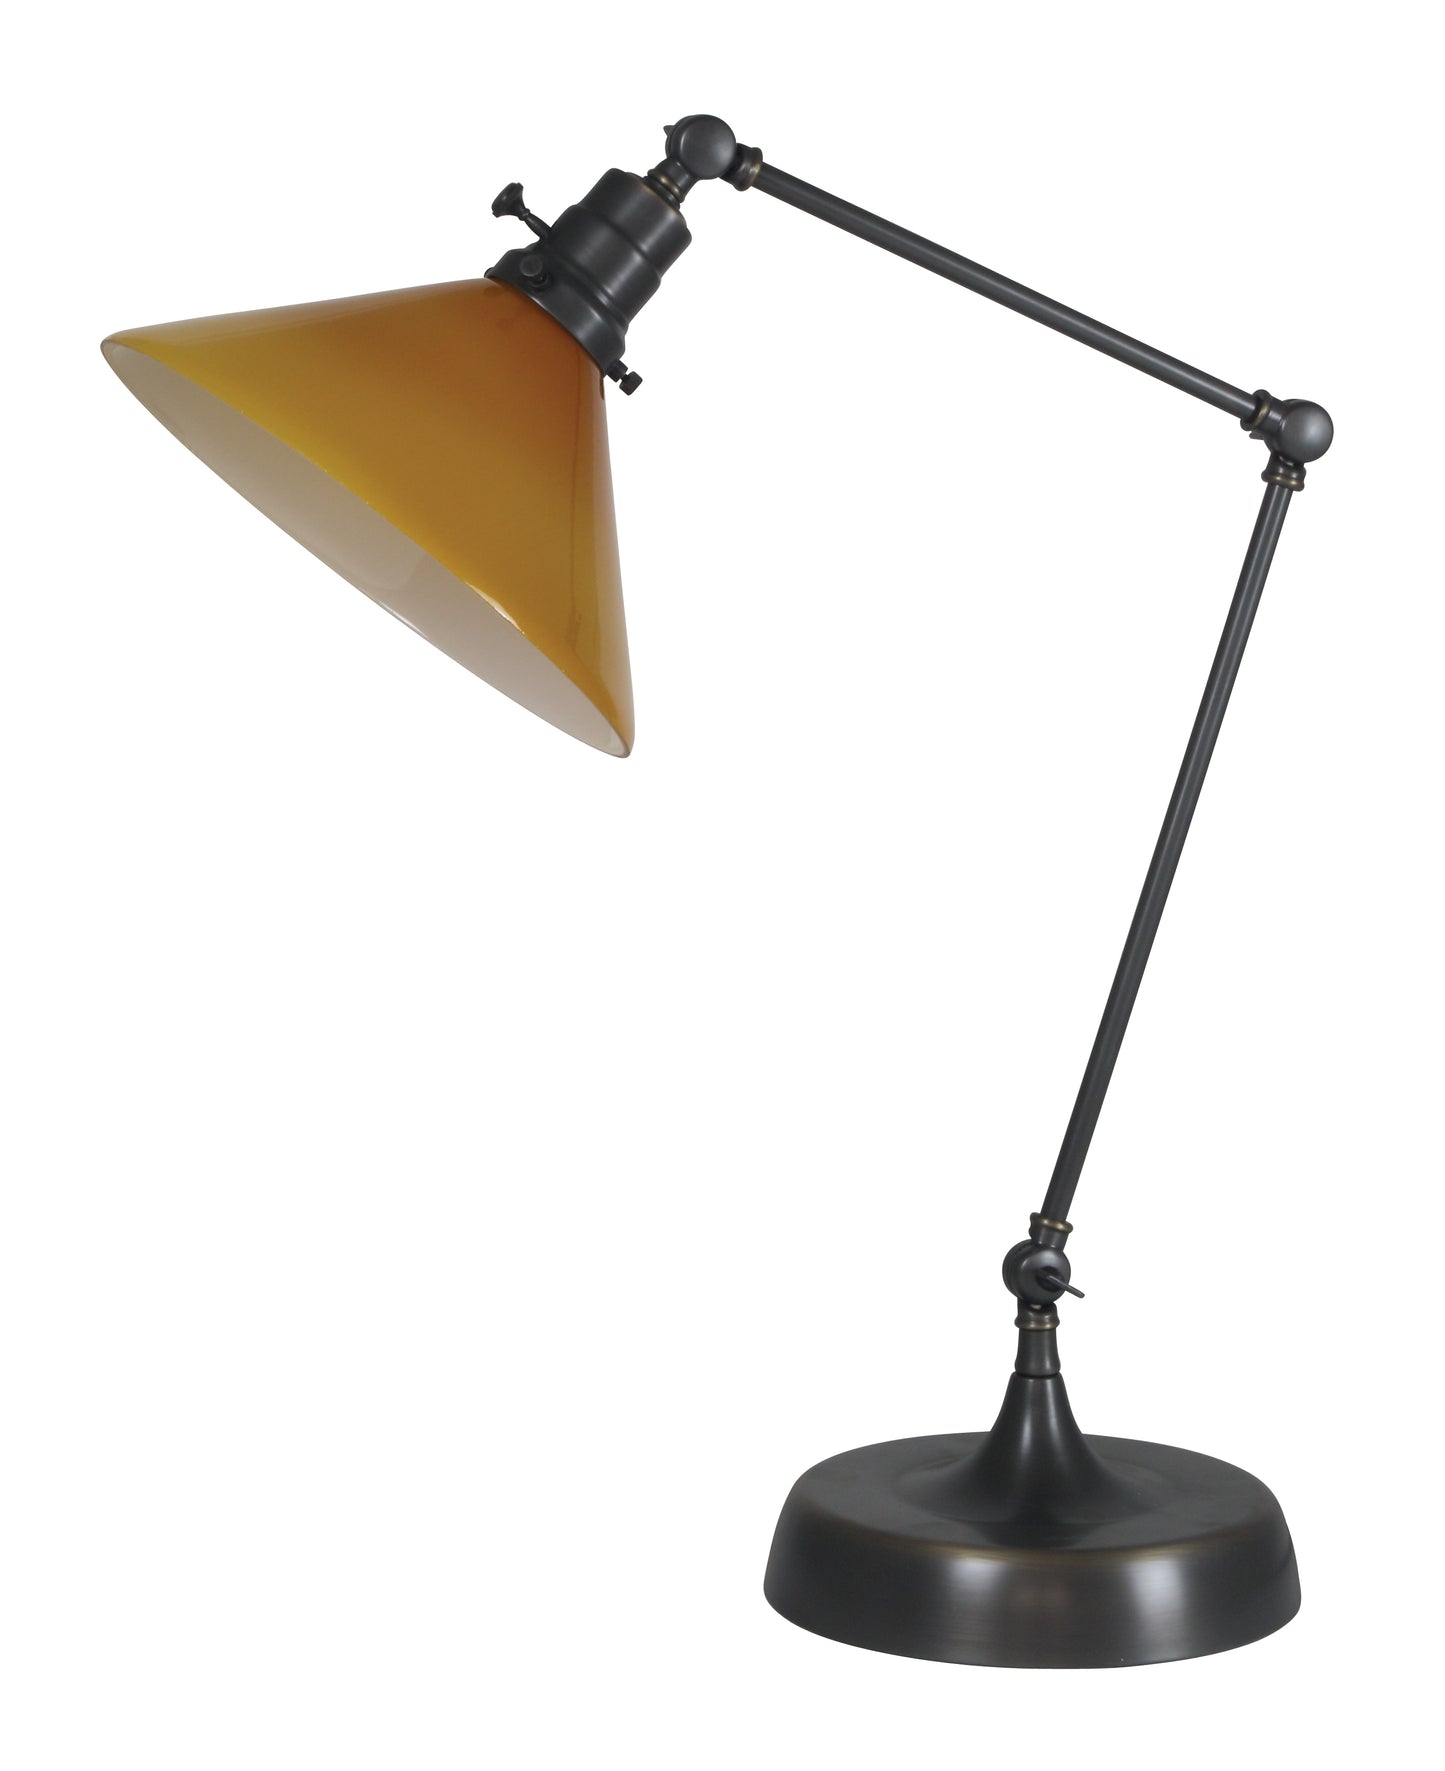 House of Troy Otis Industrial Table Lamp OT650-OB-AM